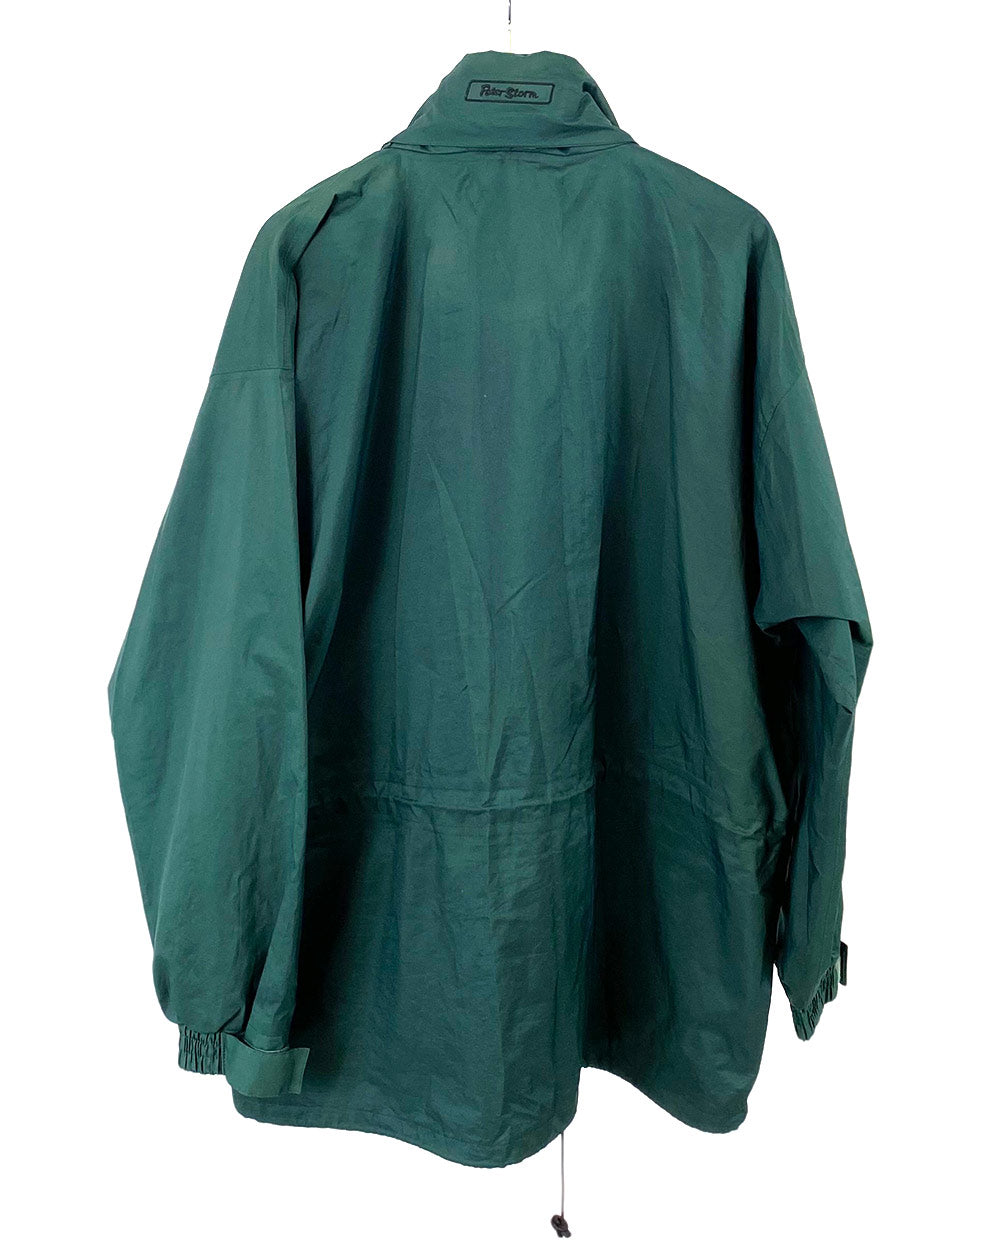 Peter Storm Anorak Green Coat XL